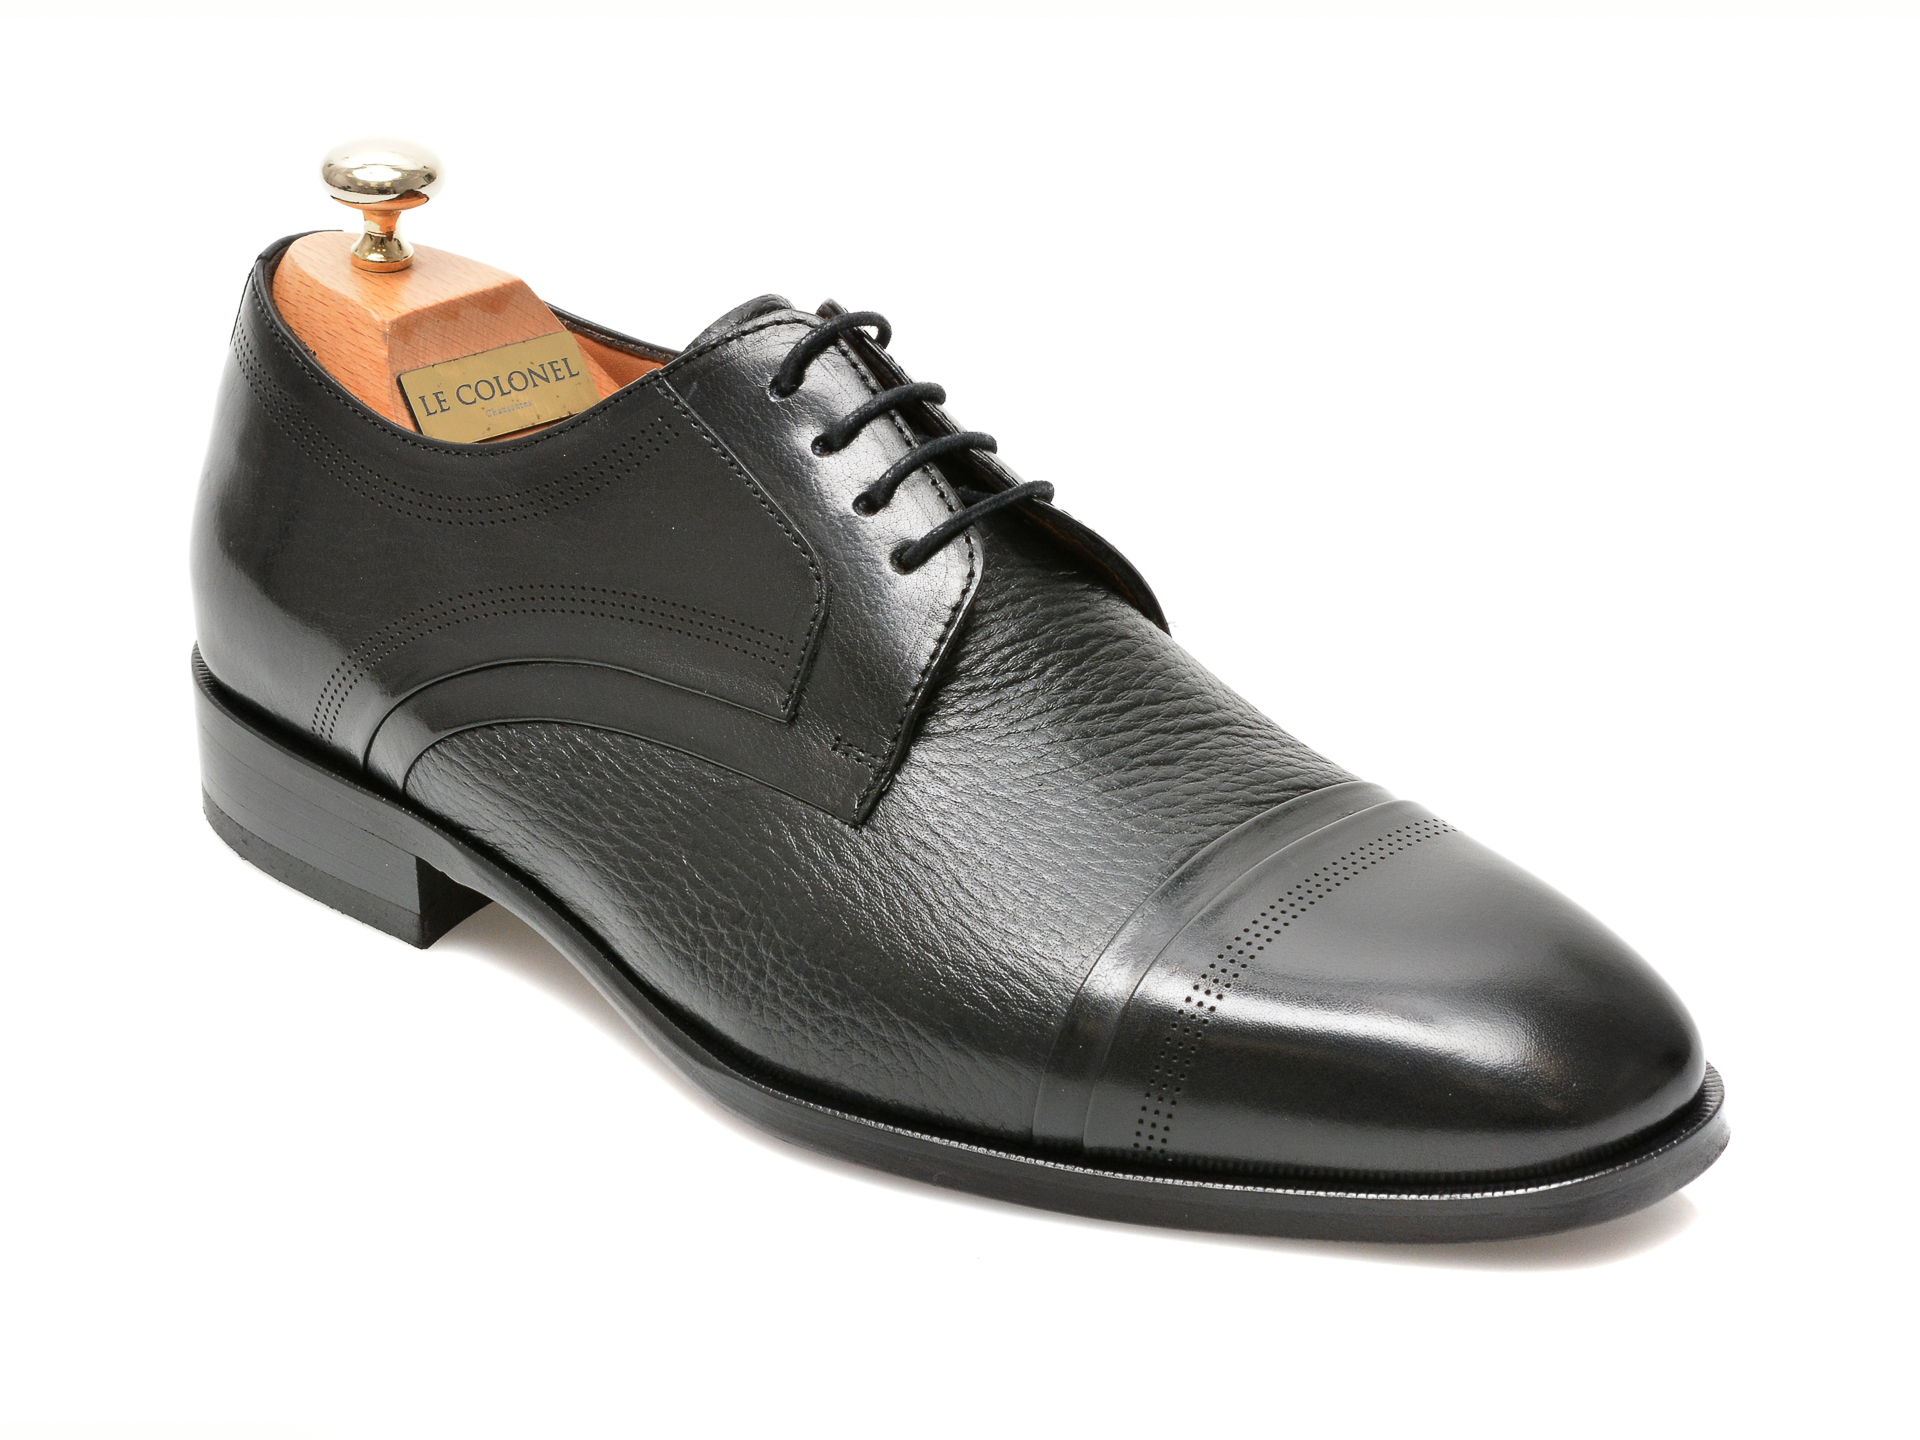 Pantofi LE COLONEL negri, 48470, din piele naturala Le Colonel imagine 2022 13clothing.ro